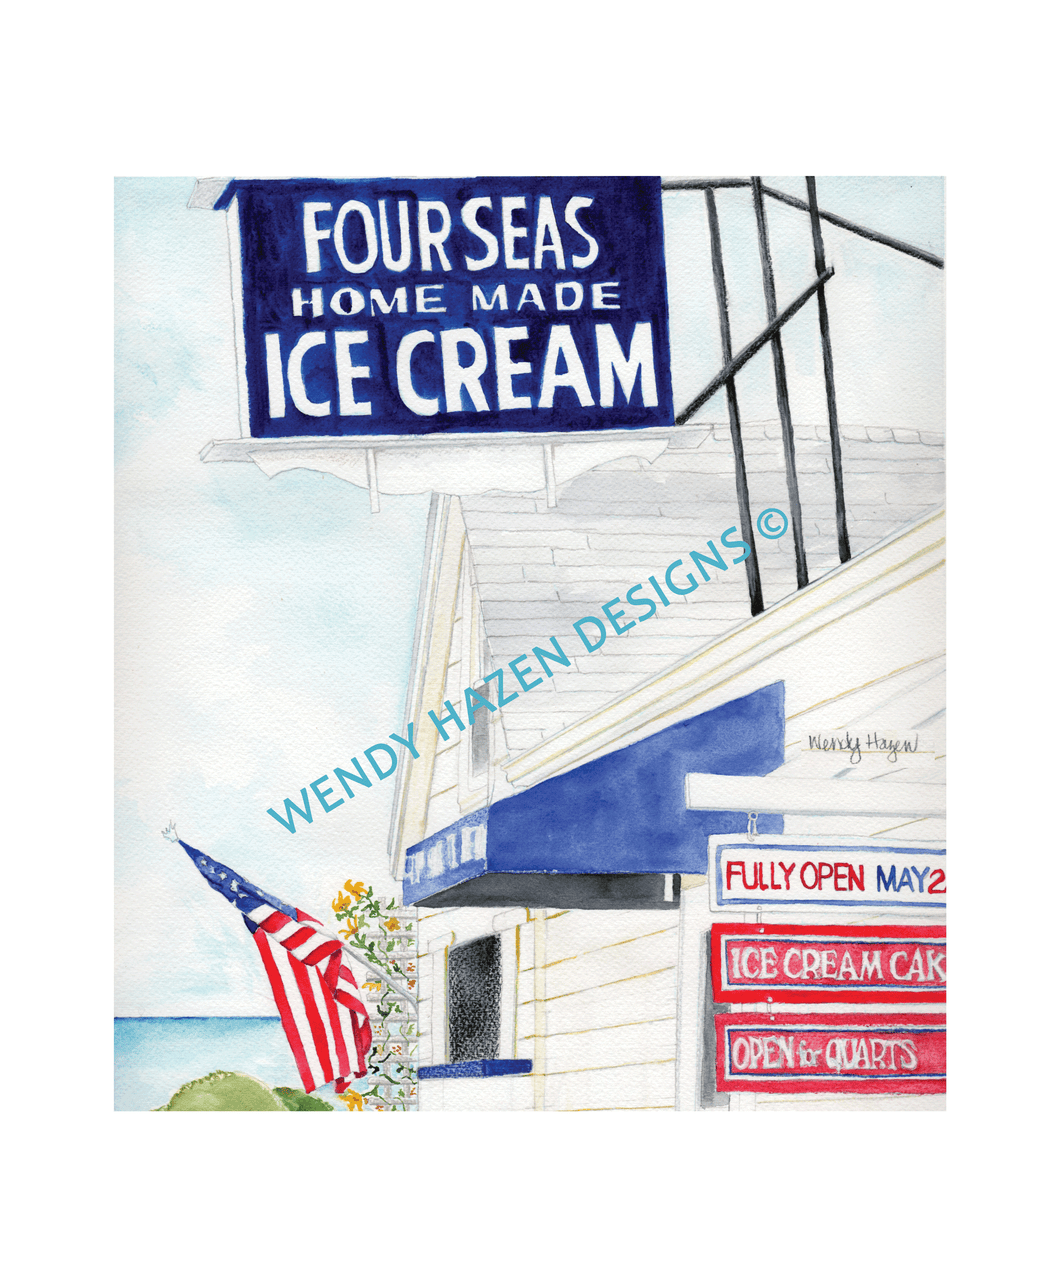 Four Seas Ice Cream the best!